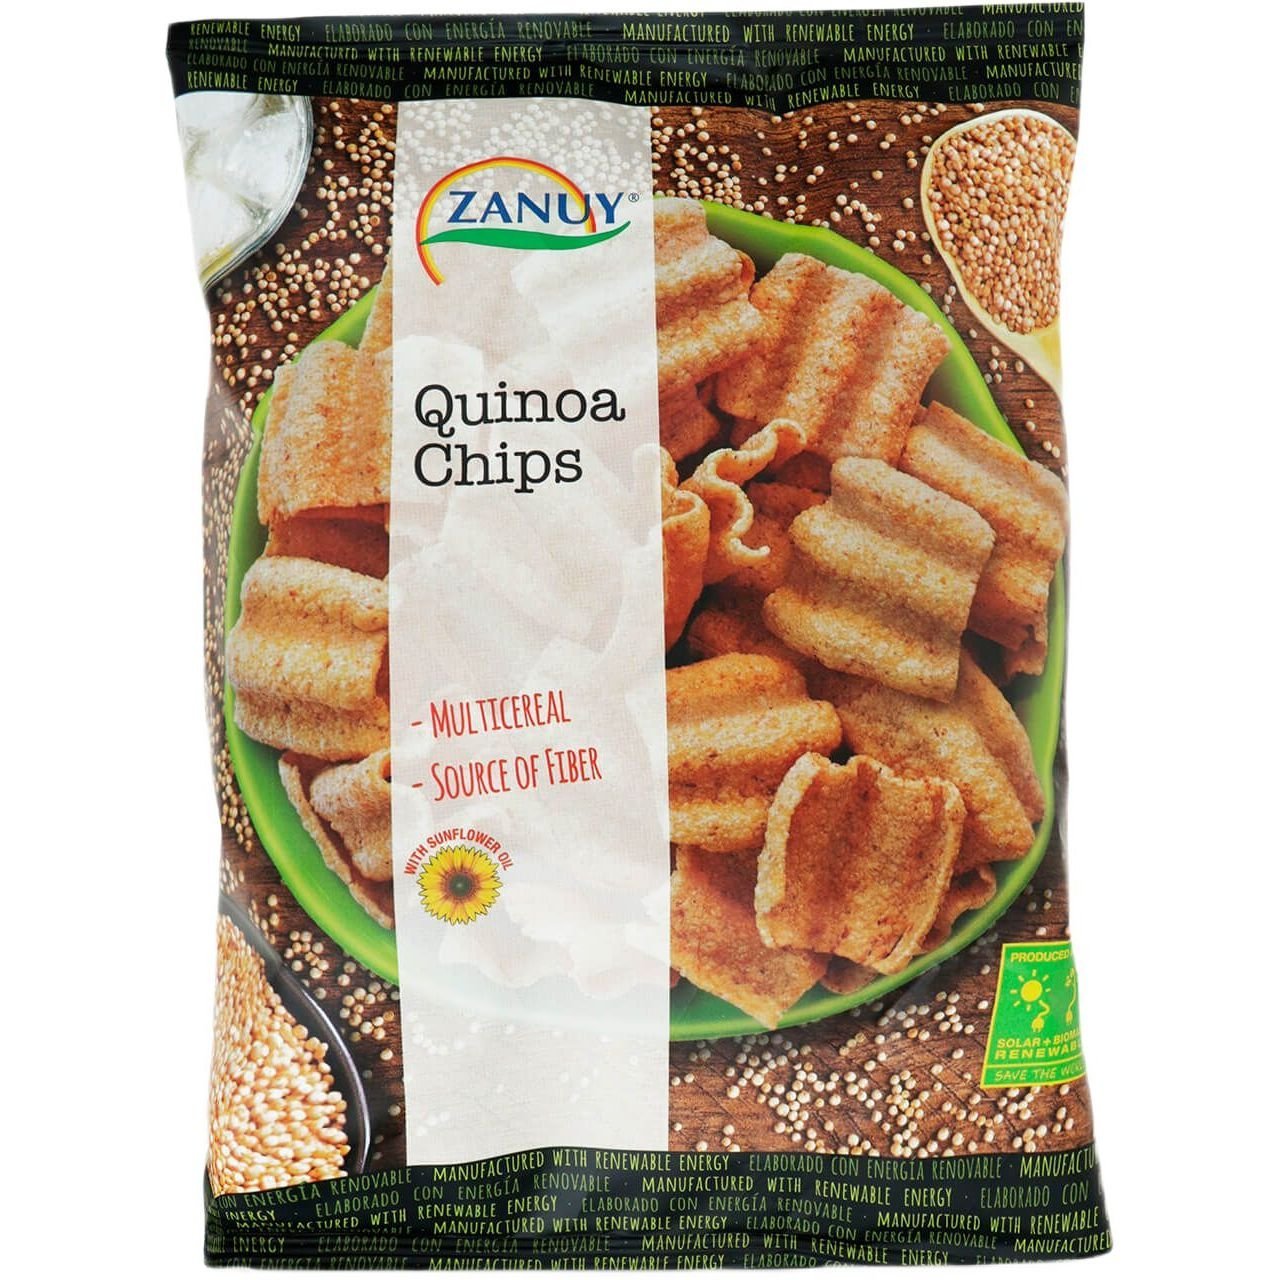 Снеки Zanuy Quinoa Chips мультизернові 65 г (746120) - фото 1